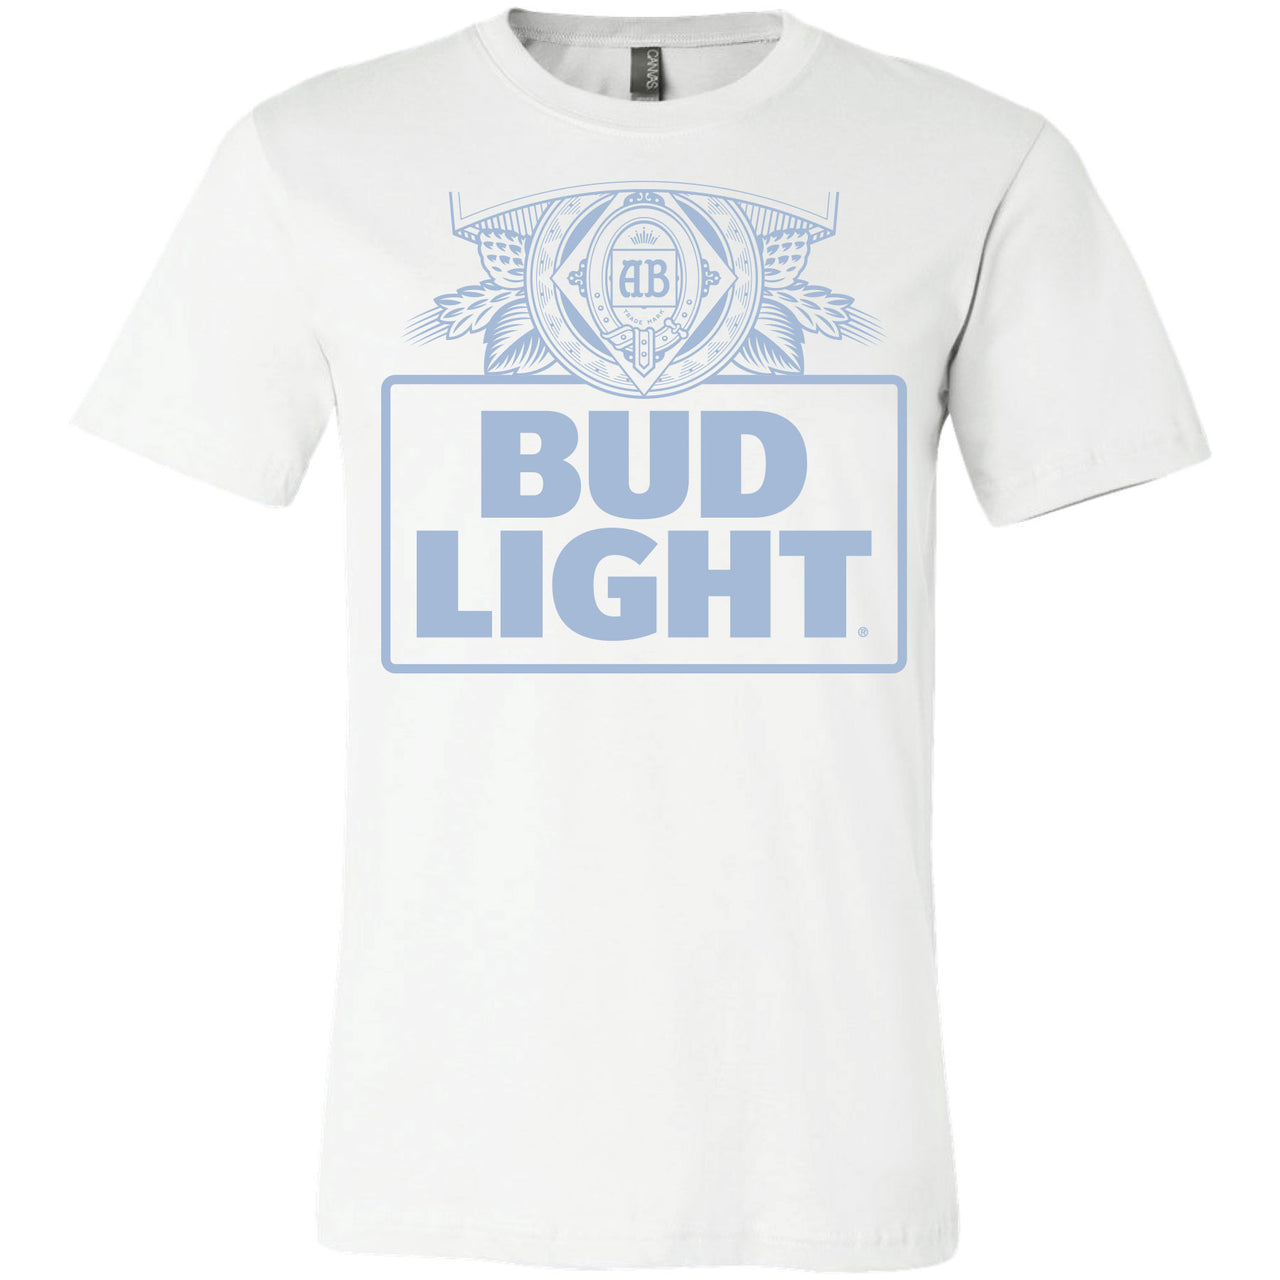 Bud Light - Bud Light Label Shirt